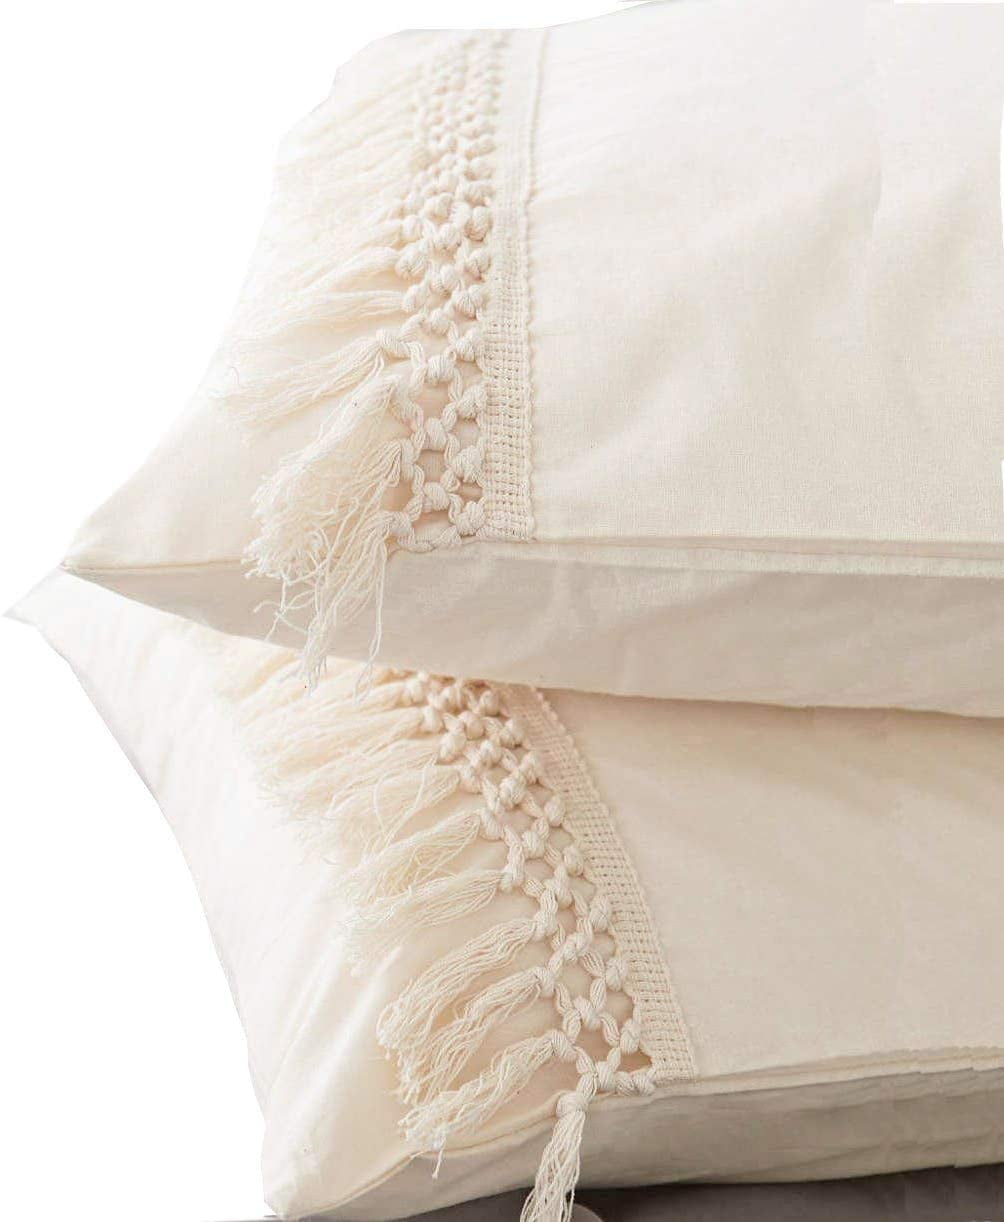 Flber Tufted Tassel Sham Set Lattice Cotton Pillow Covers,19.7in x35.5in,Set of 2